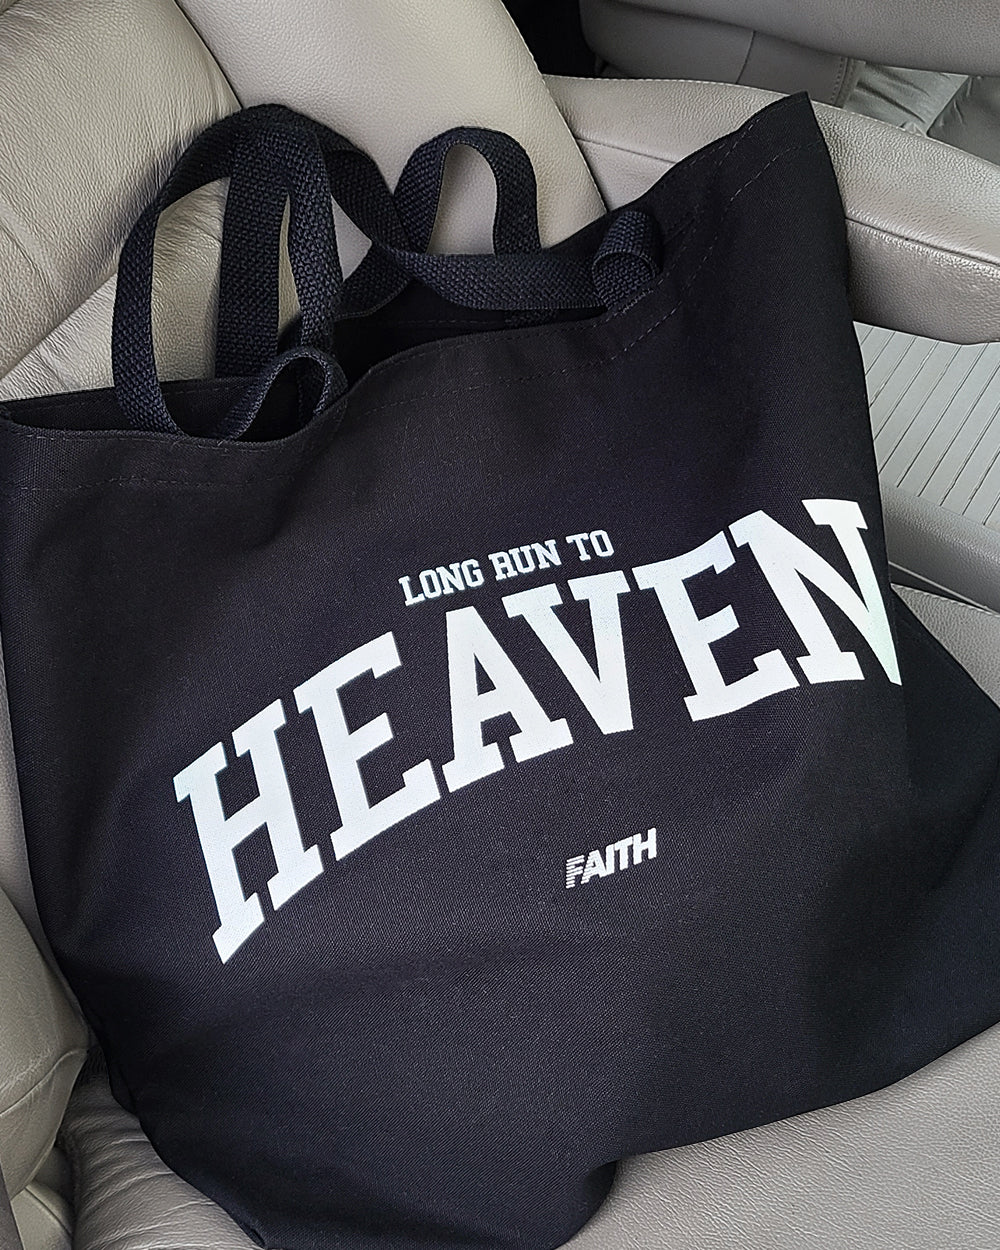 Long Run To Heaven Tote Bag (Black)